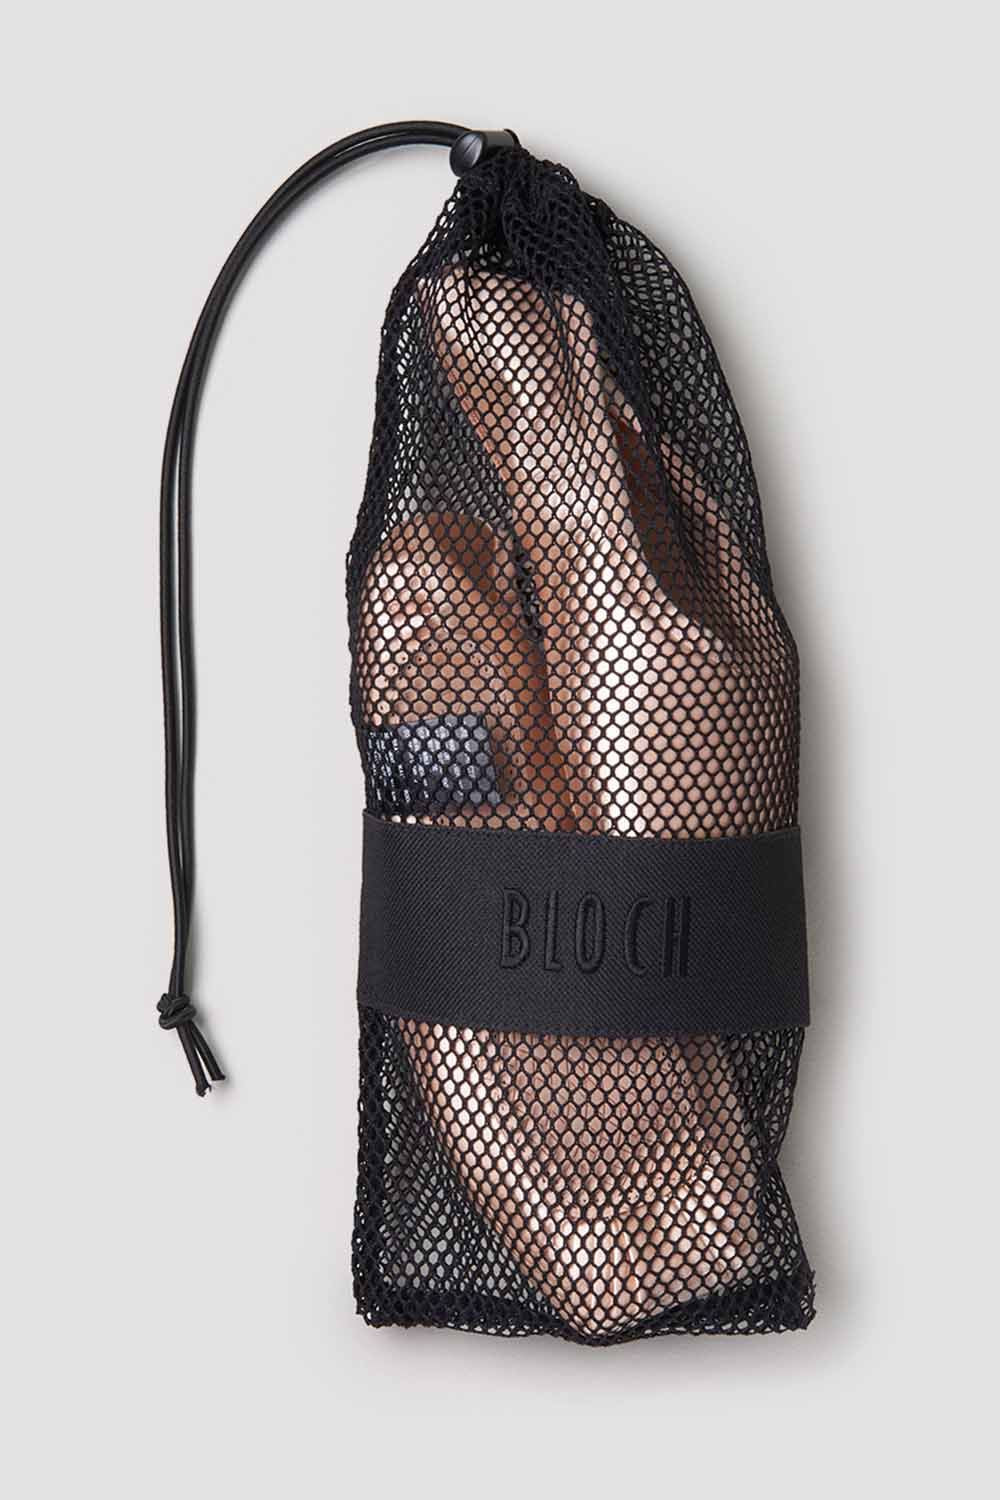 BLOCH Pointe Shoe Bag, Black Nylon